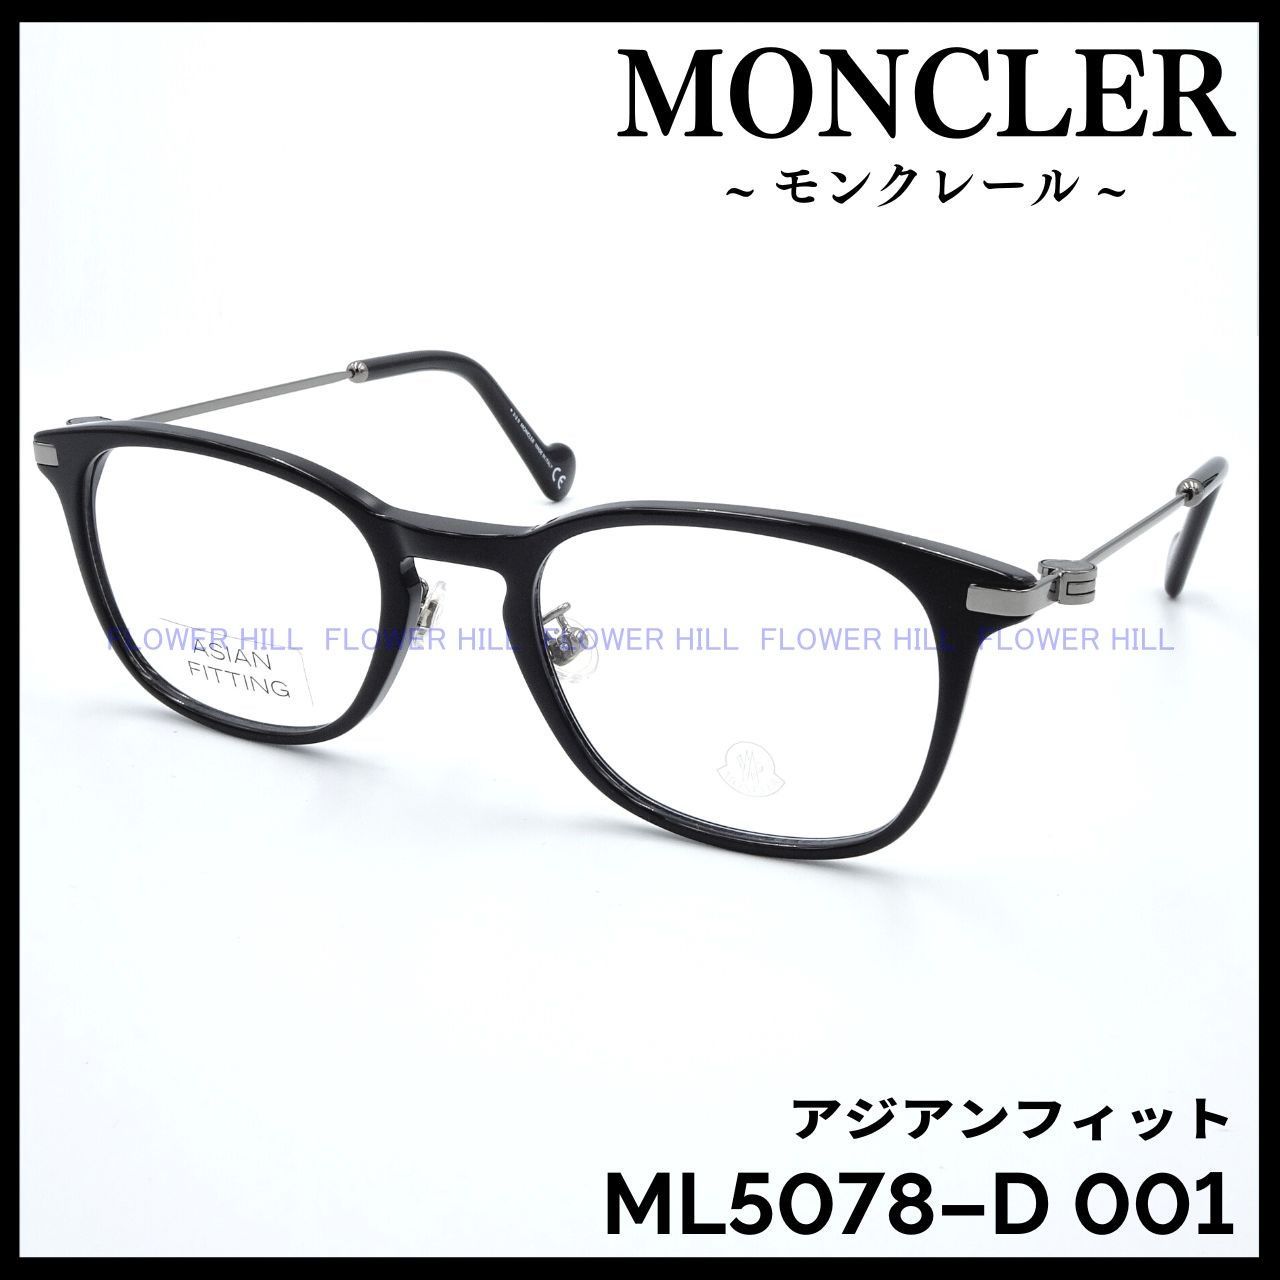 MONCLER ML5079-D 001 メガネ フレーム ブラック シルバー ...